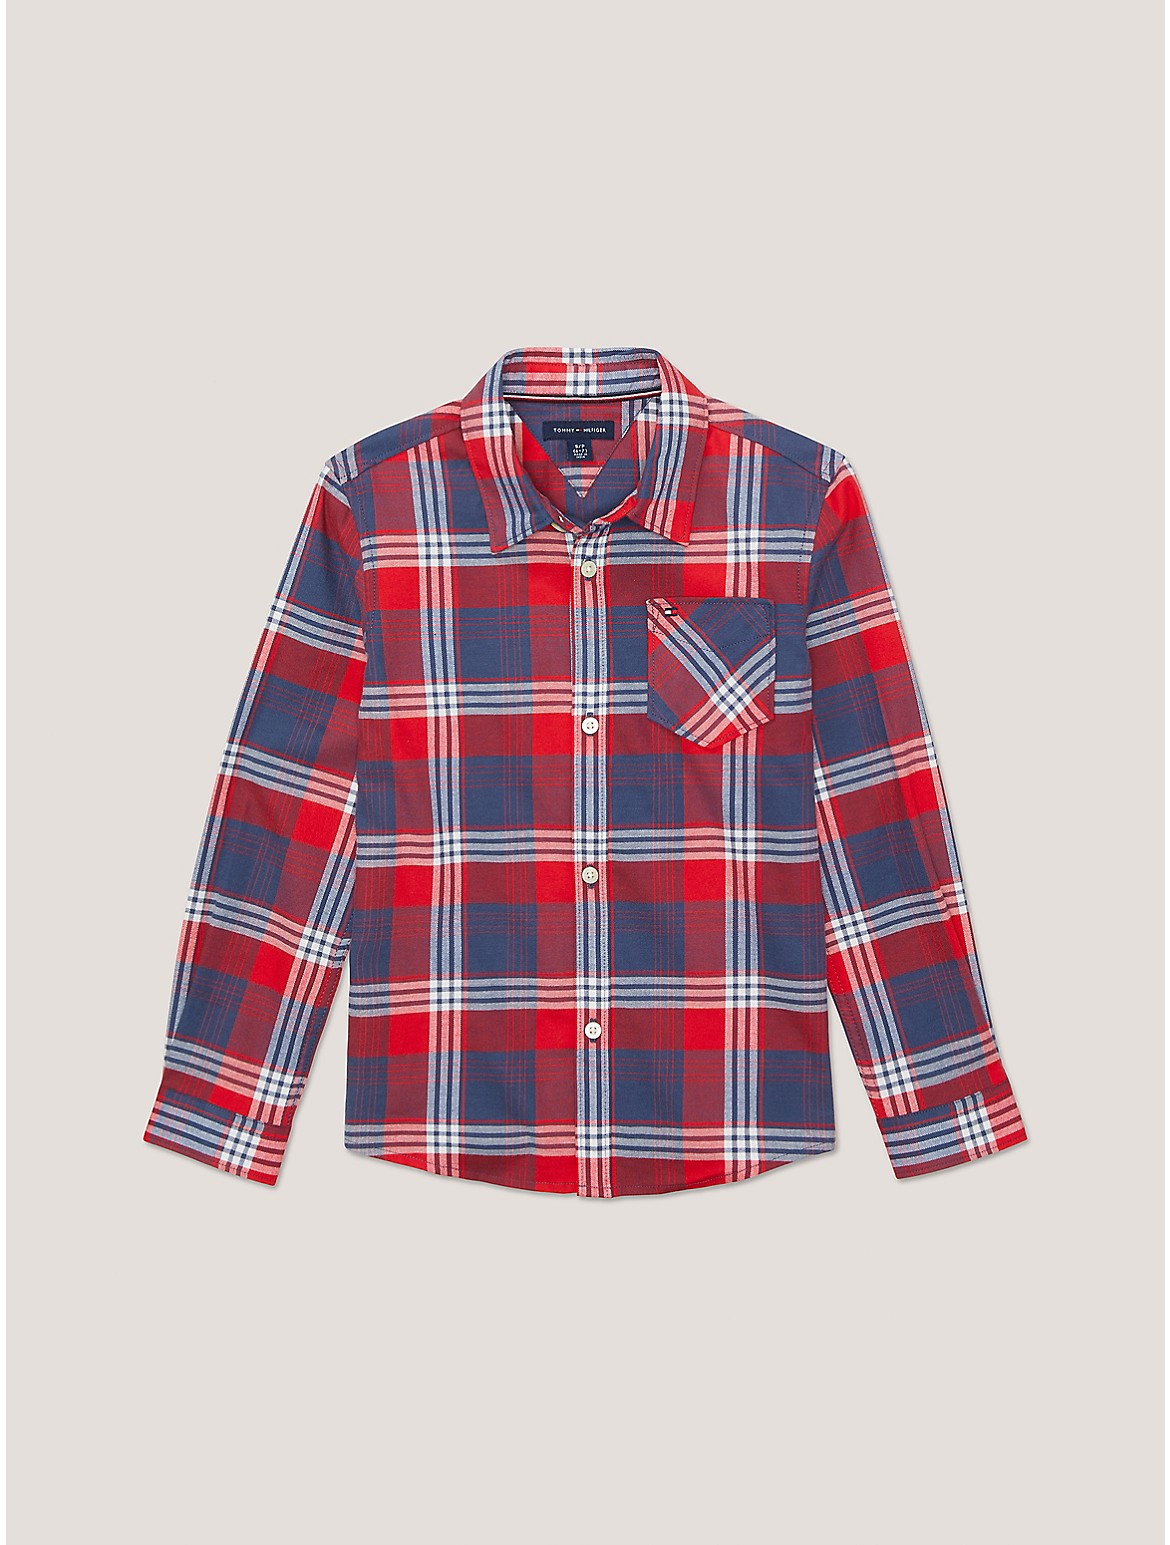 Tommy Hilfiger Boys' Kids' Plaid Shirt - Red - S